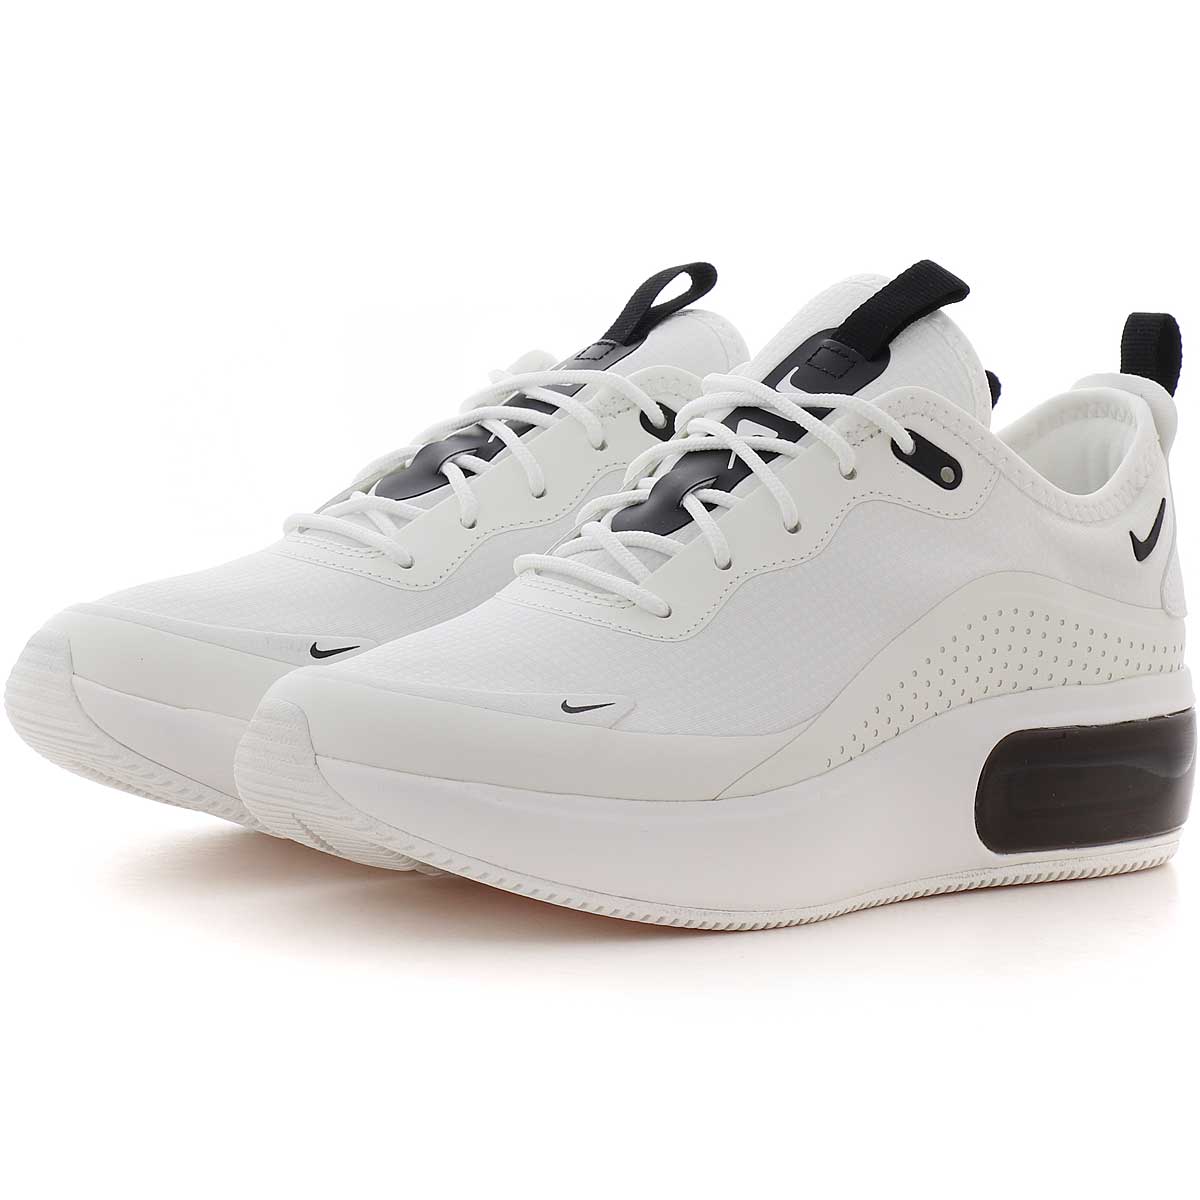 Nike Air Max Dia белые с черным (35-39 